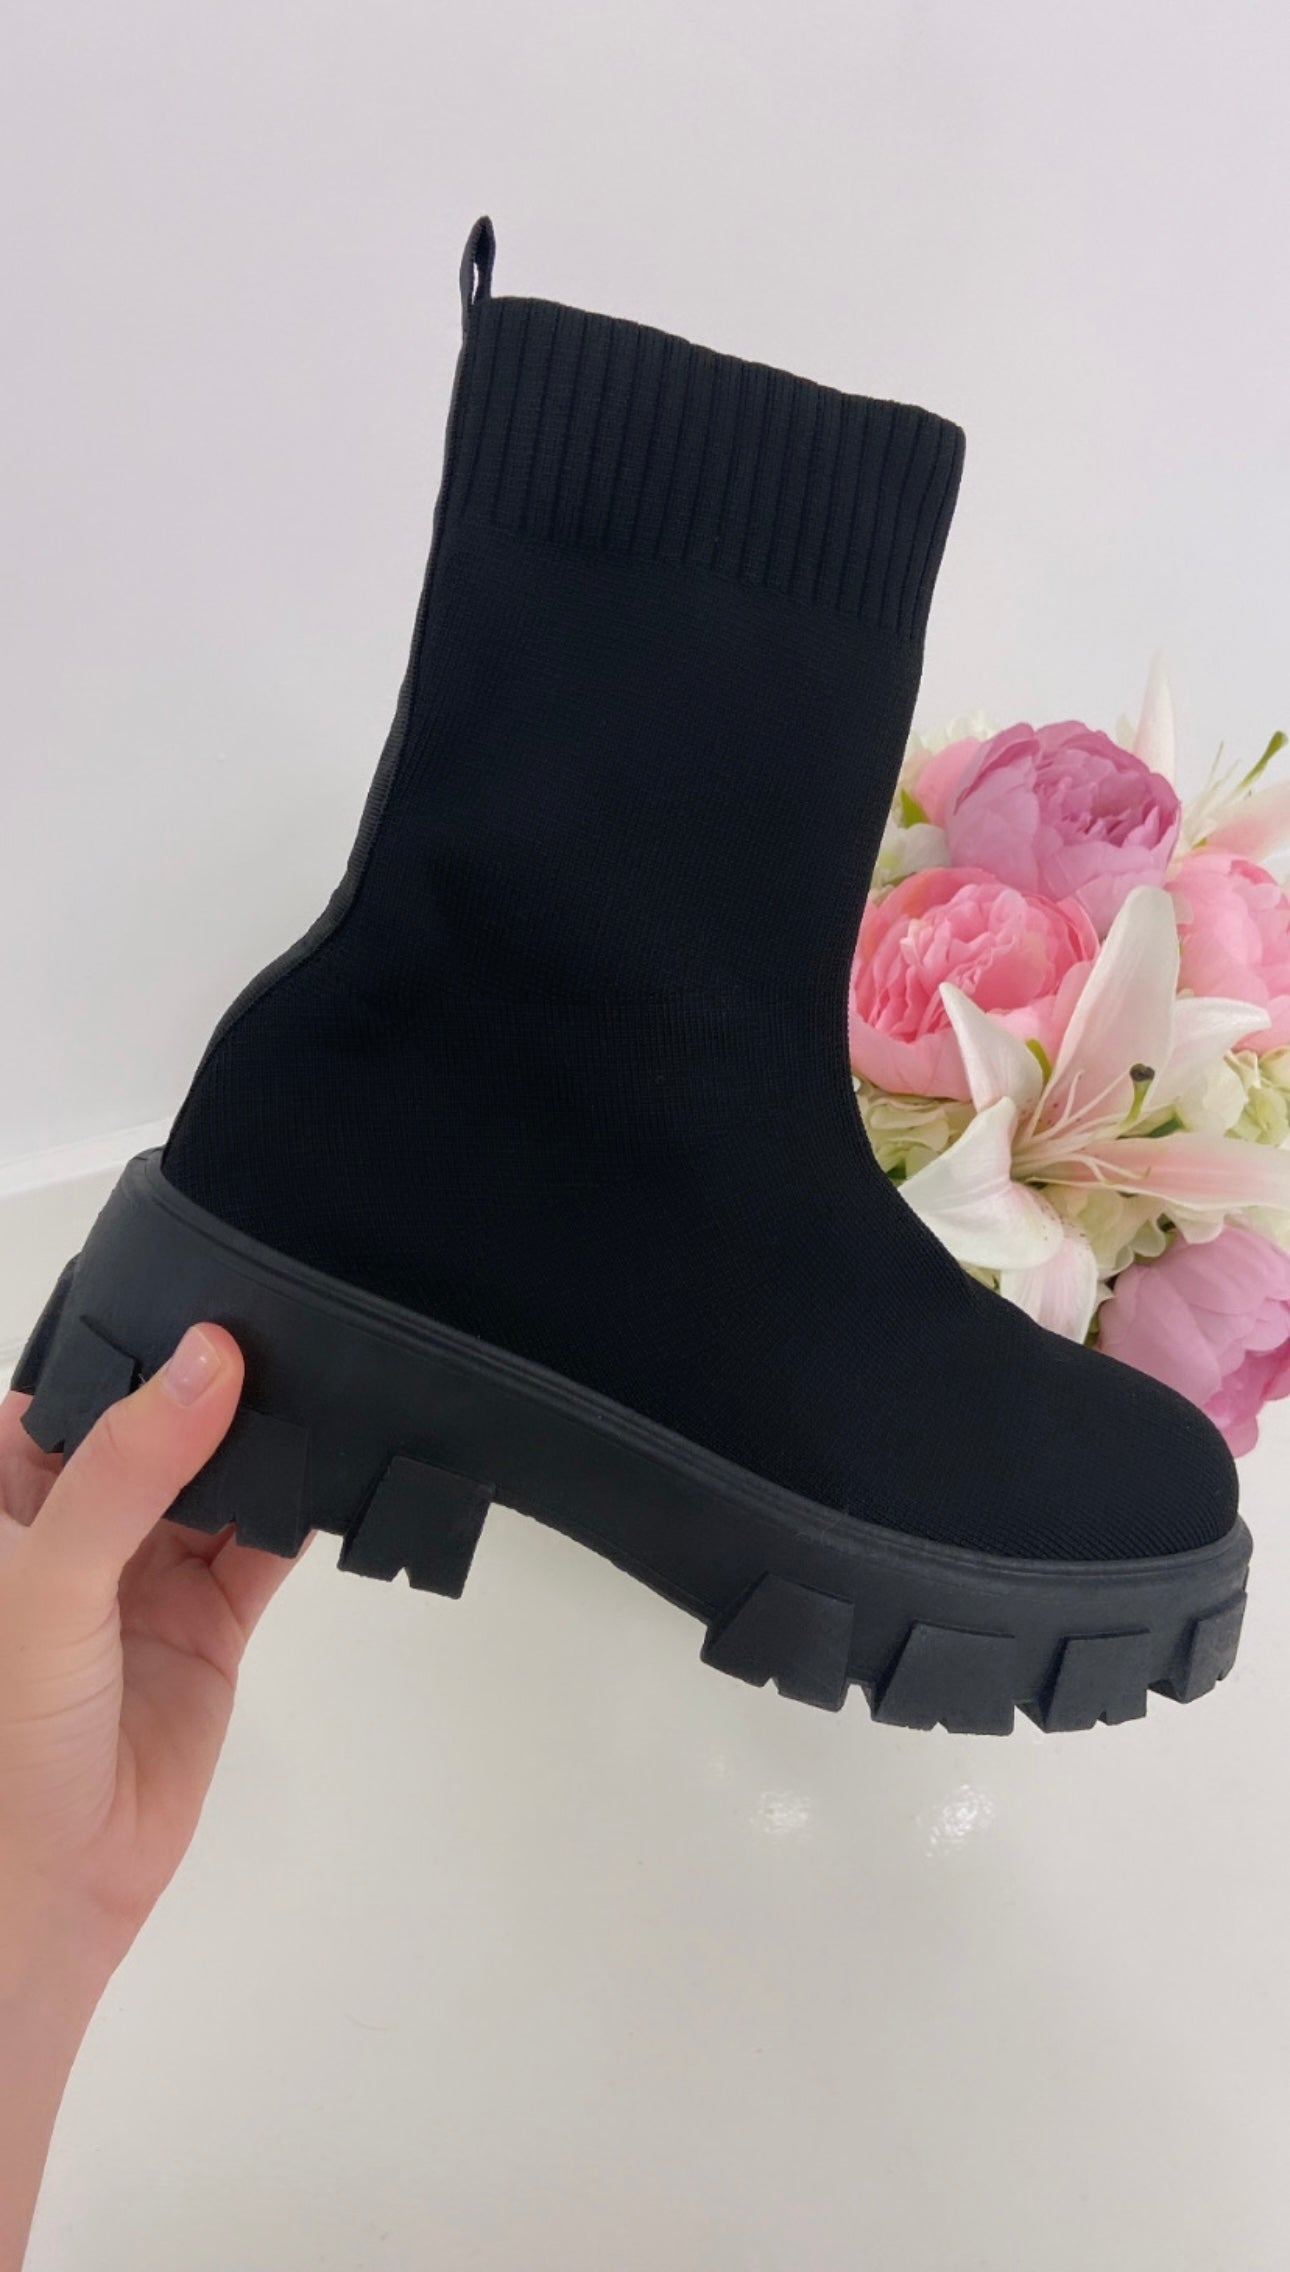 Black sock boots